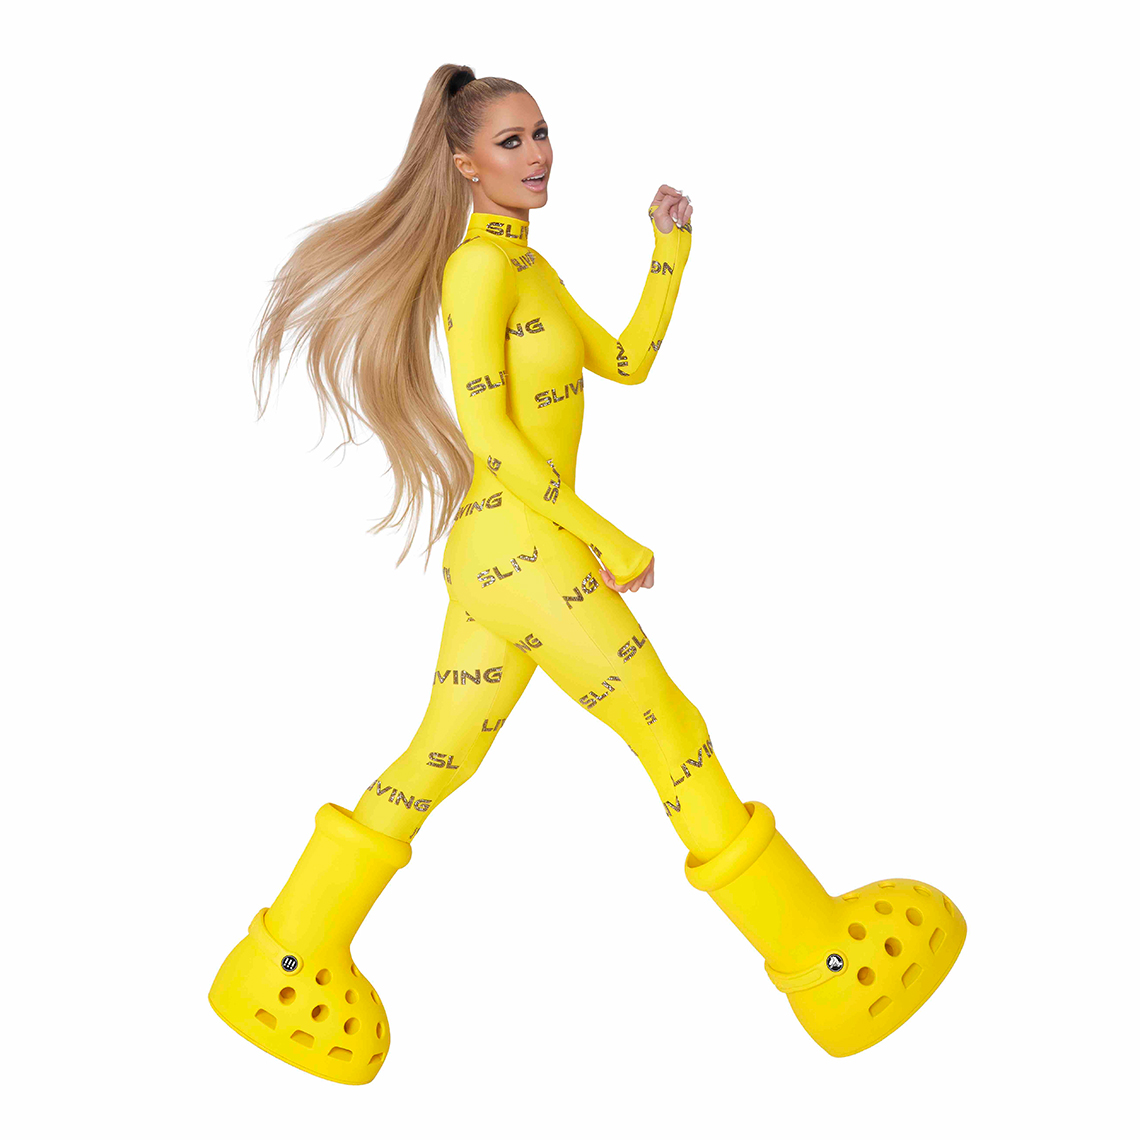 Paris Hilton Mschf Crocs Big Red Boot Yellow 2